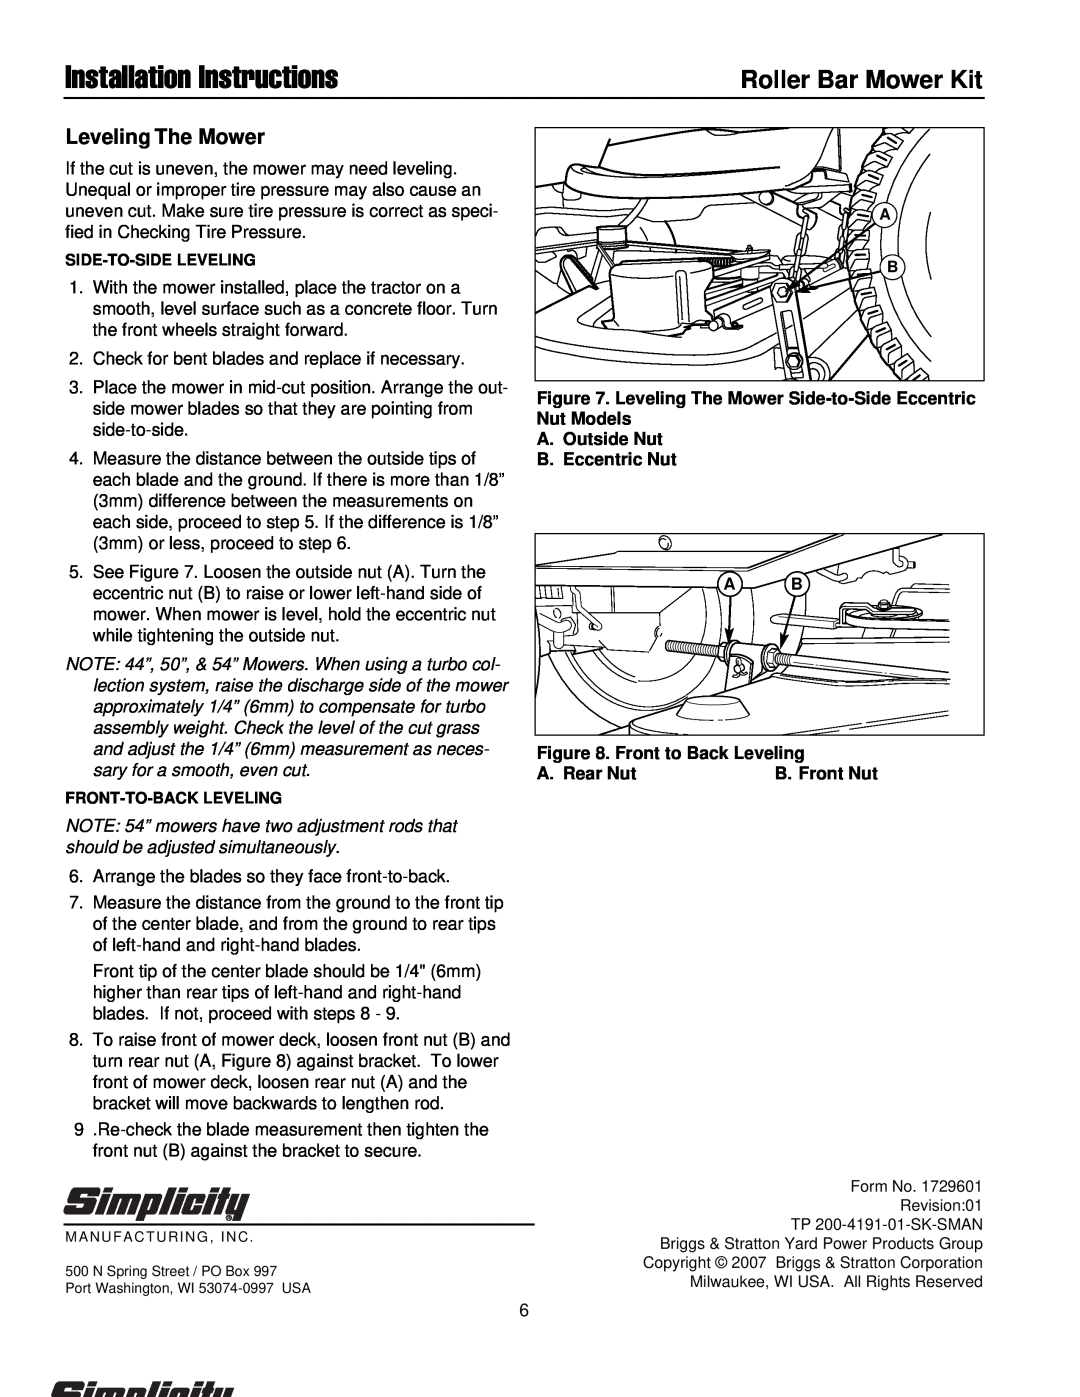 Briggs & Stratton 1687079 installation instructions Leveling The Mower, Installation Instructions, Roller Bar Mower Kit 